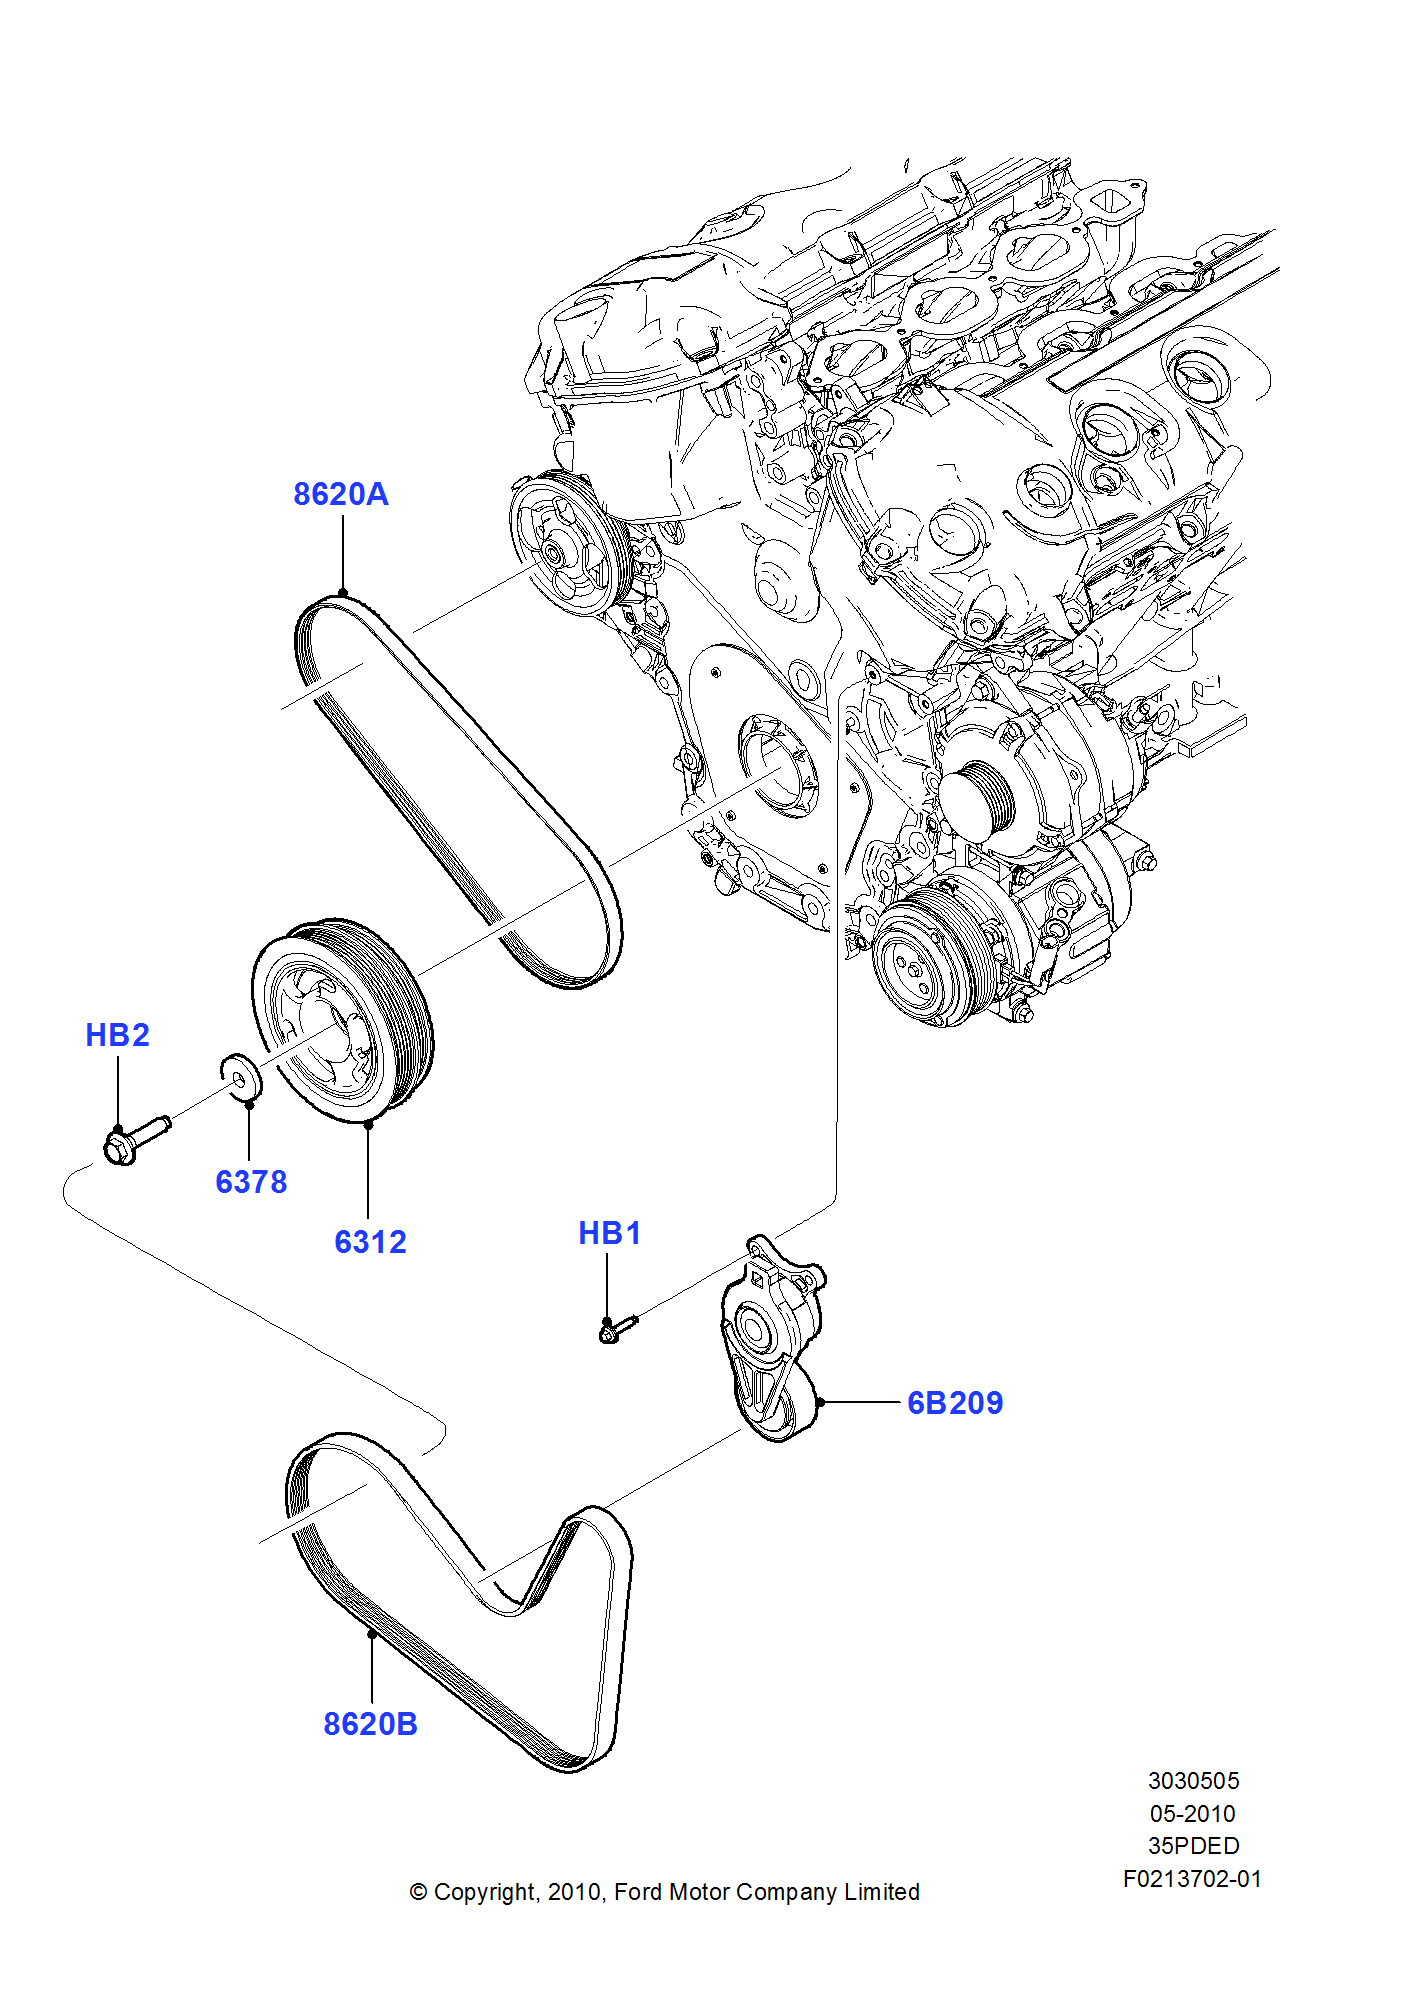 [6+] Genuine 2007 Ford Fusion Serpentine Belt Diagram And The
Description